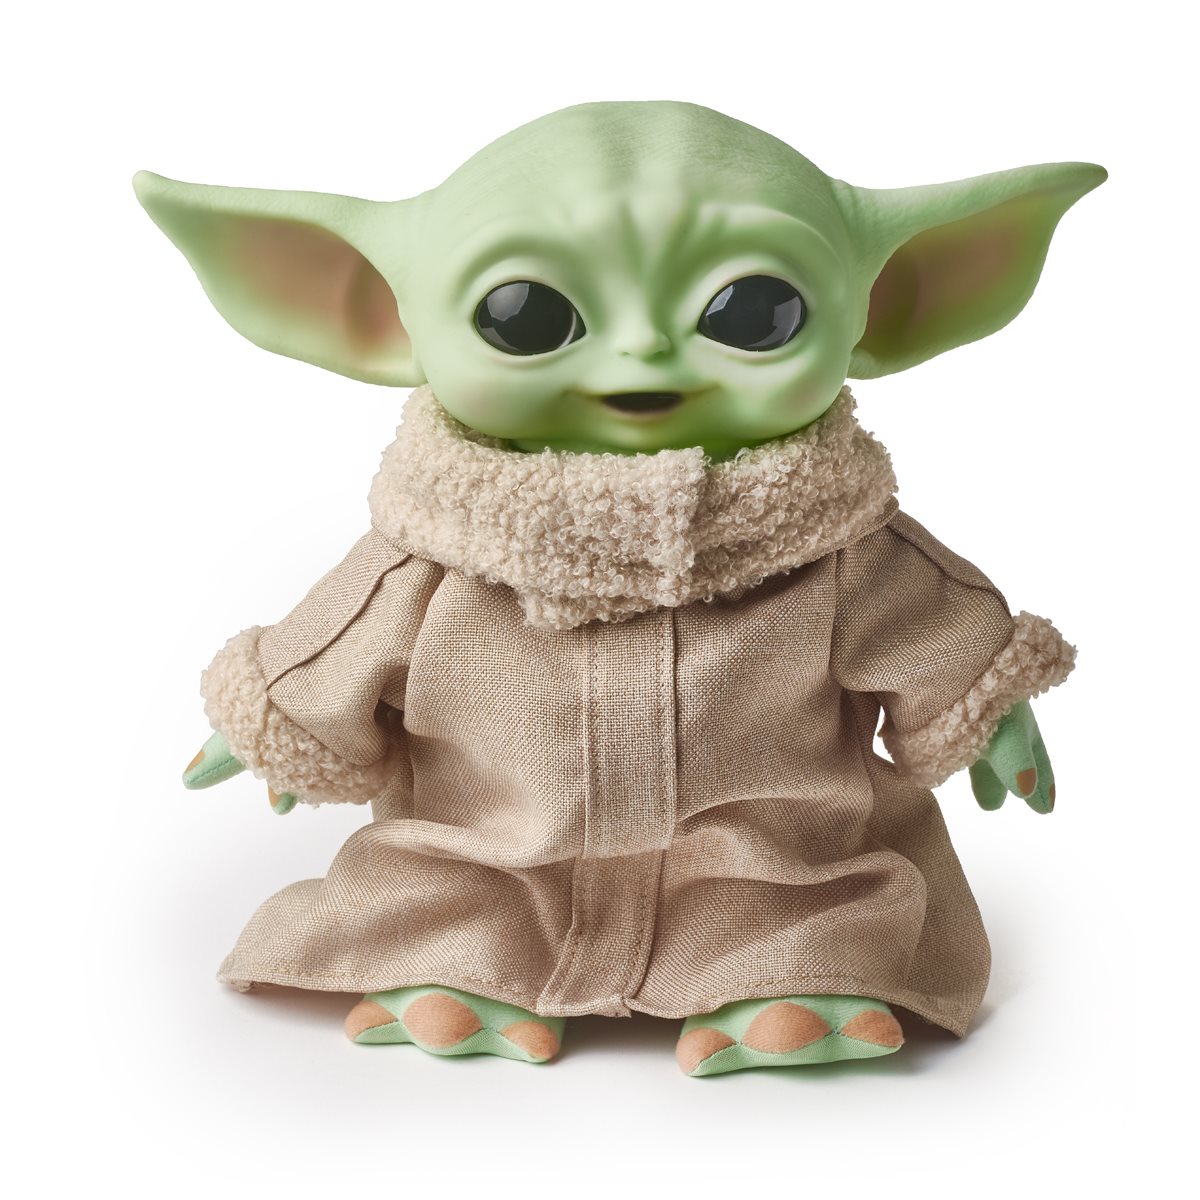 Peluche The Child (Baby Yoda). Star Wars